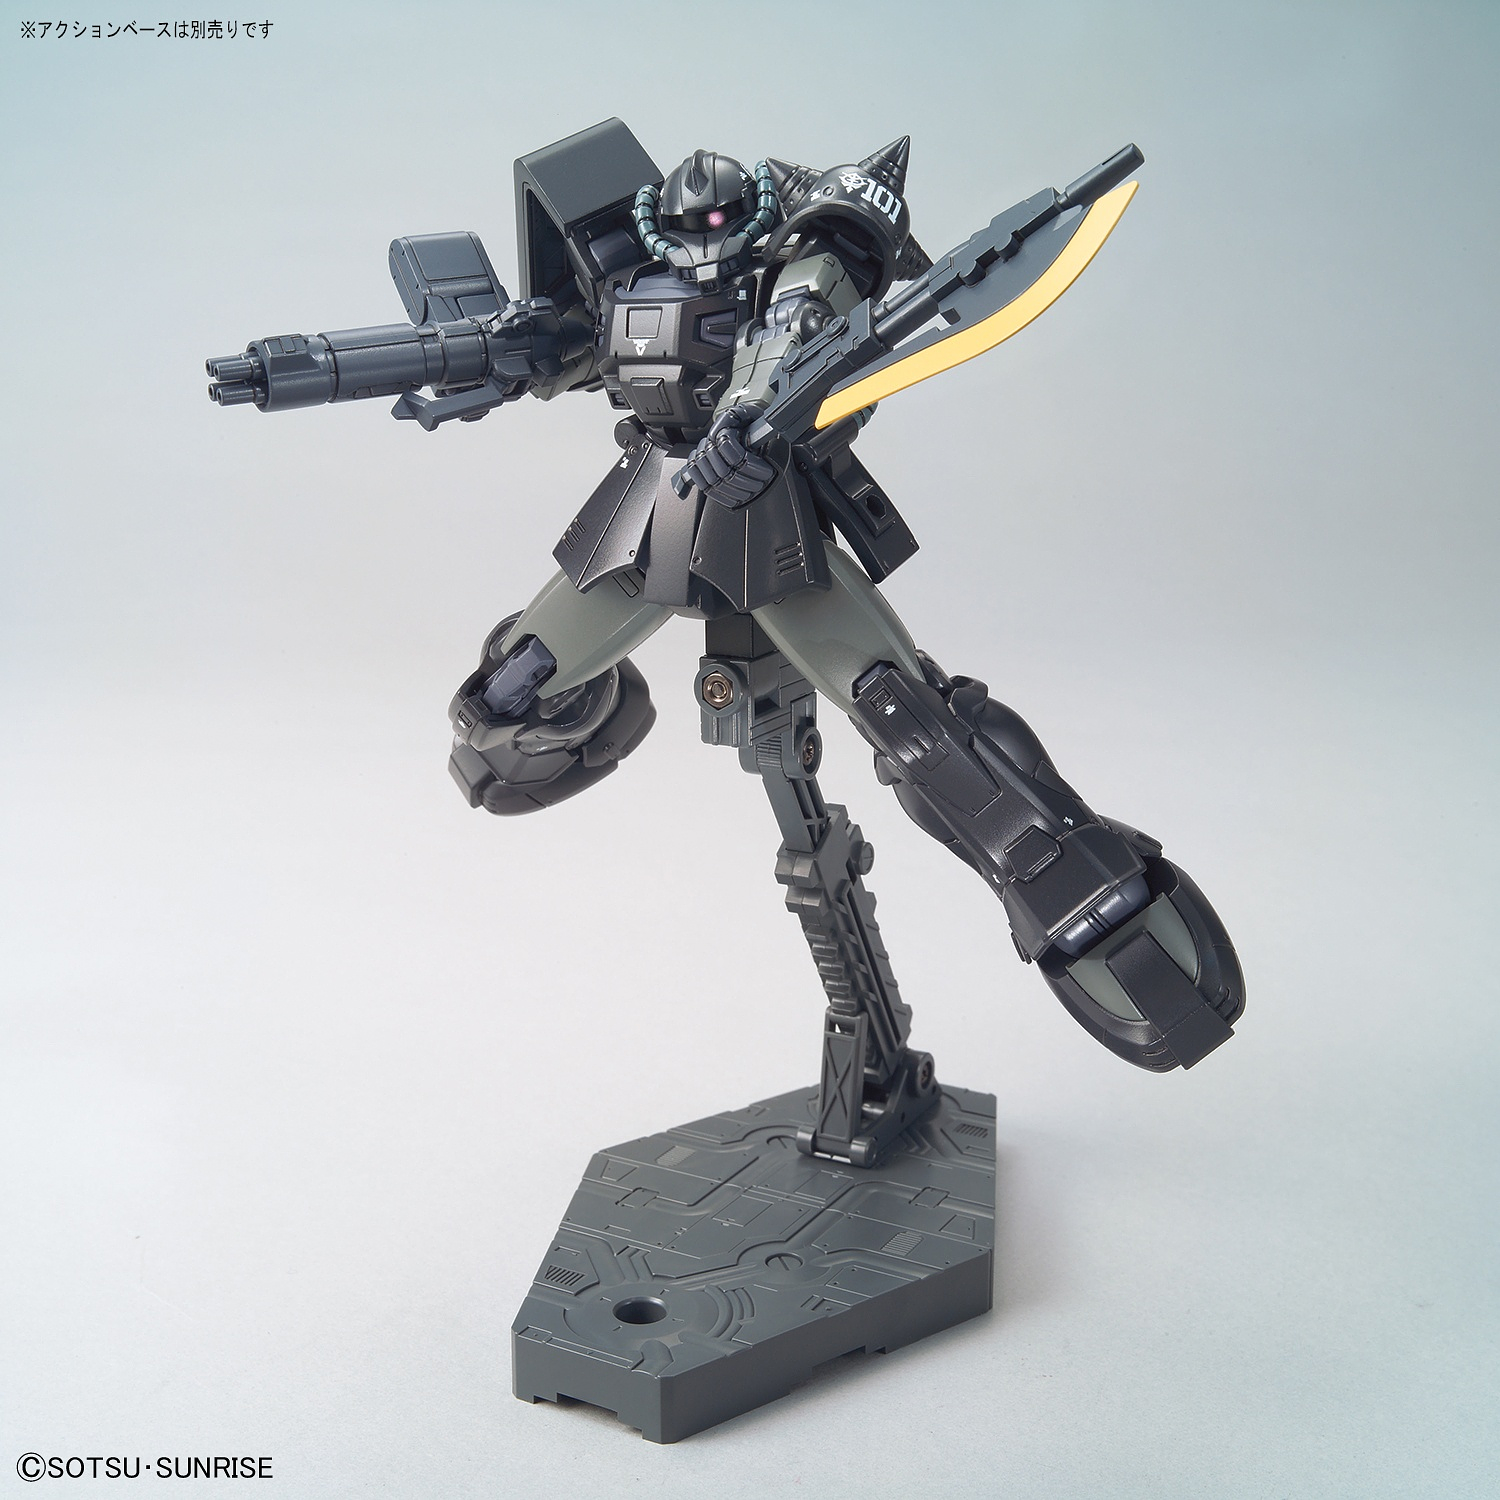 HG Gundam Act Zaku Kycilia's Forces - gundam-store.dk